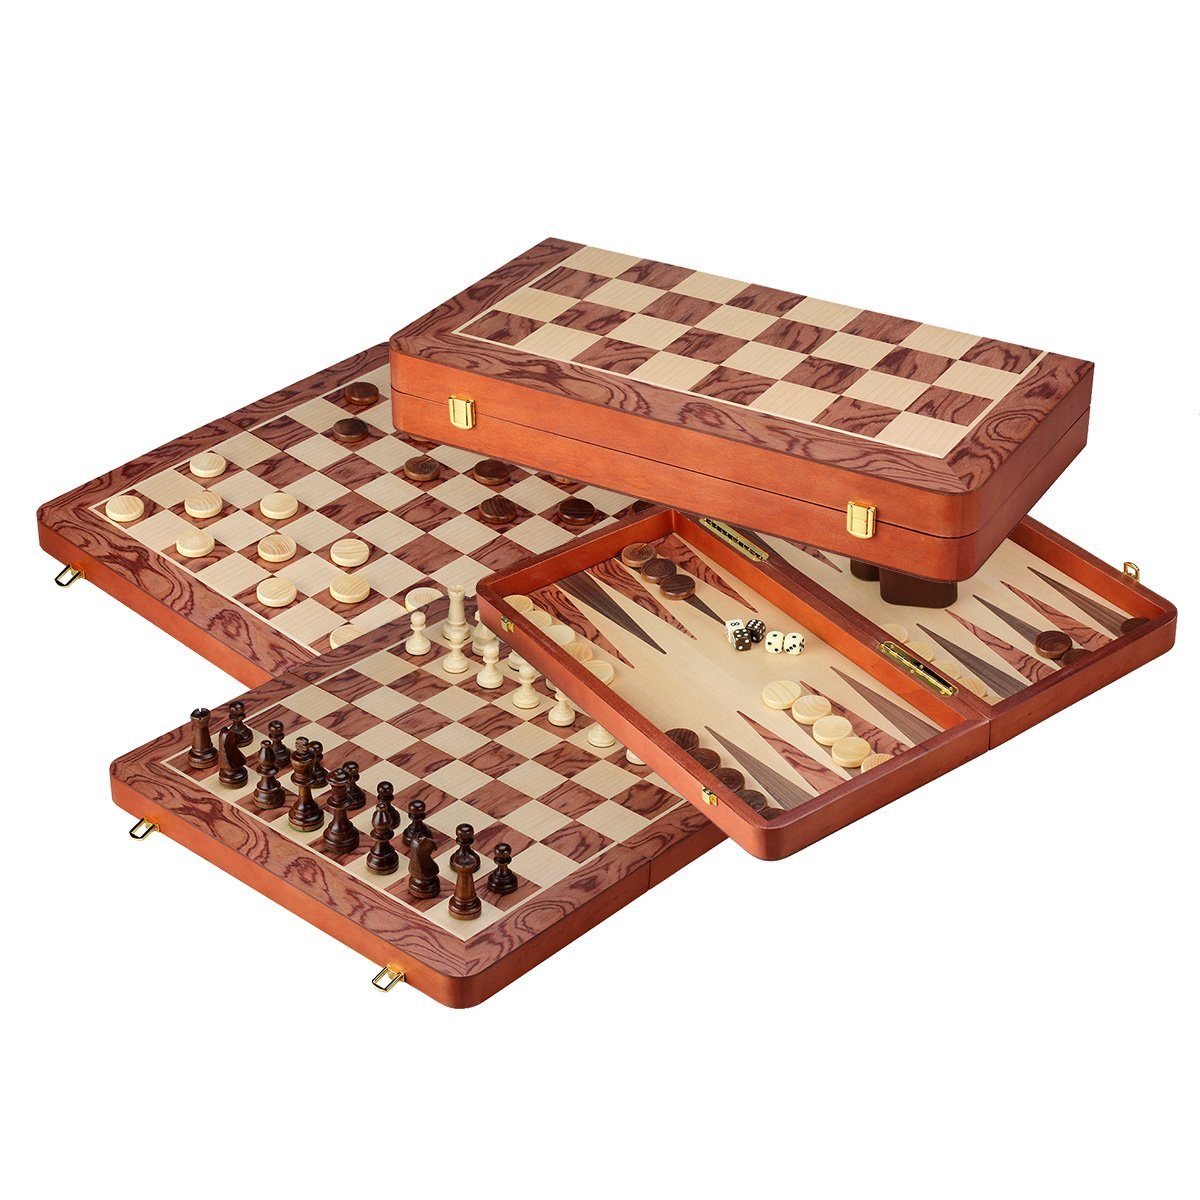 Schach Schachbrett Holz Schachspiel klappbares Brett Holzbox Reiseschach 29*29cm 